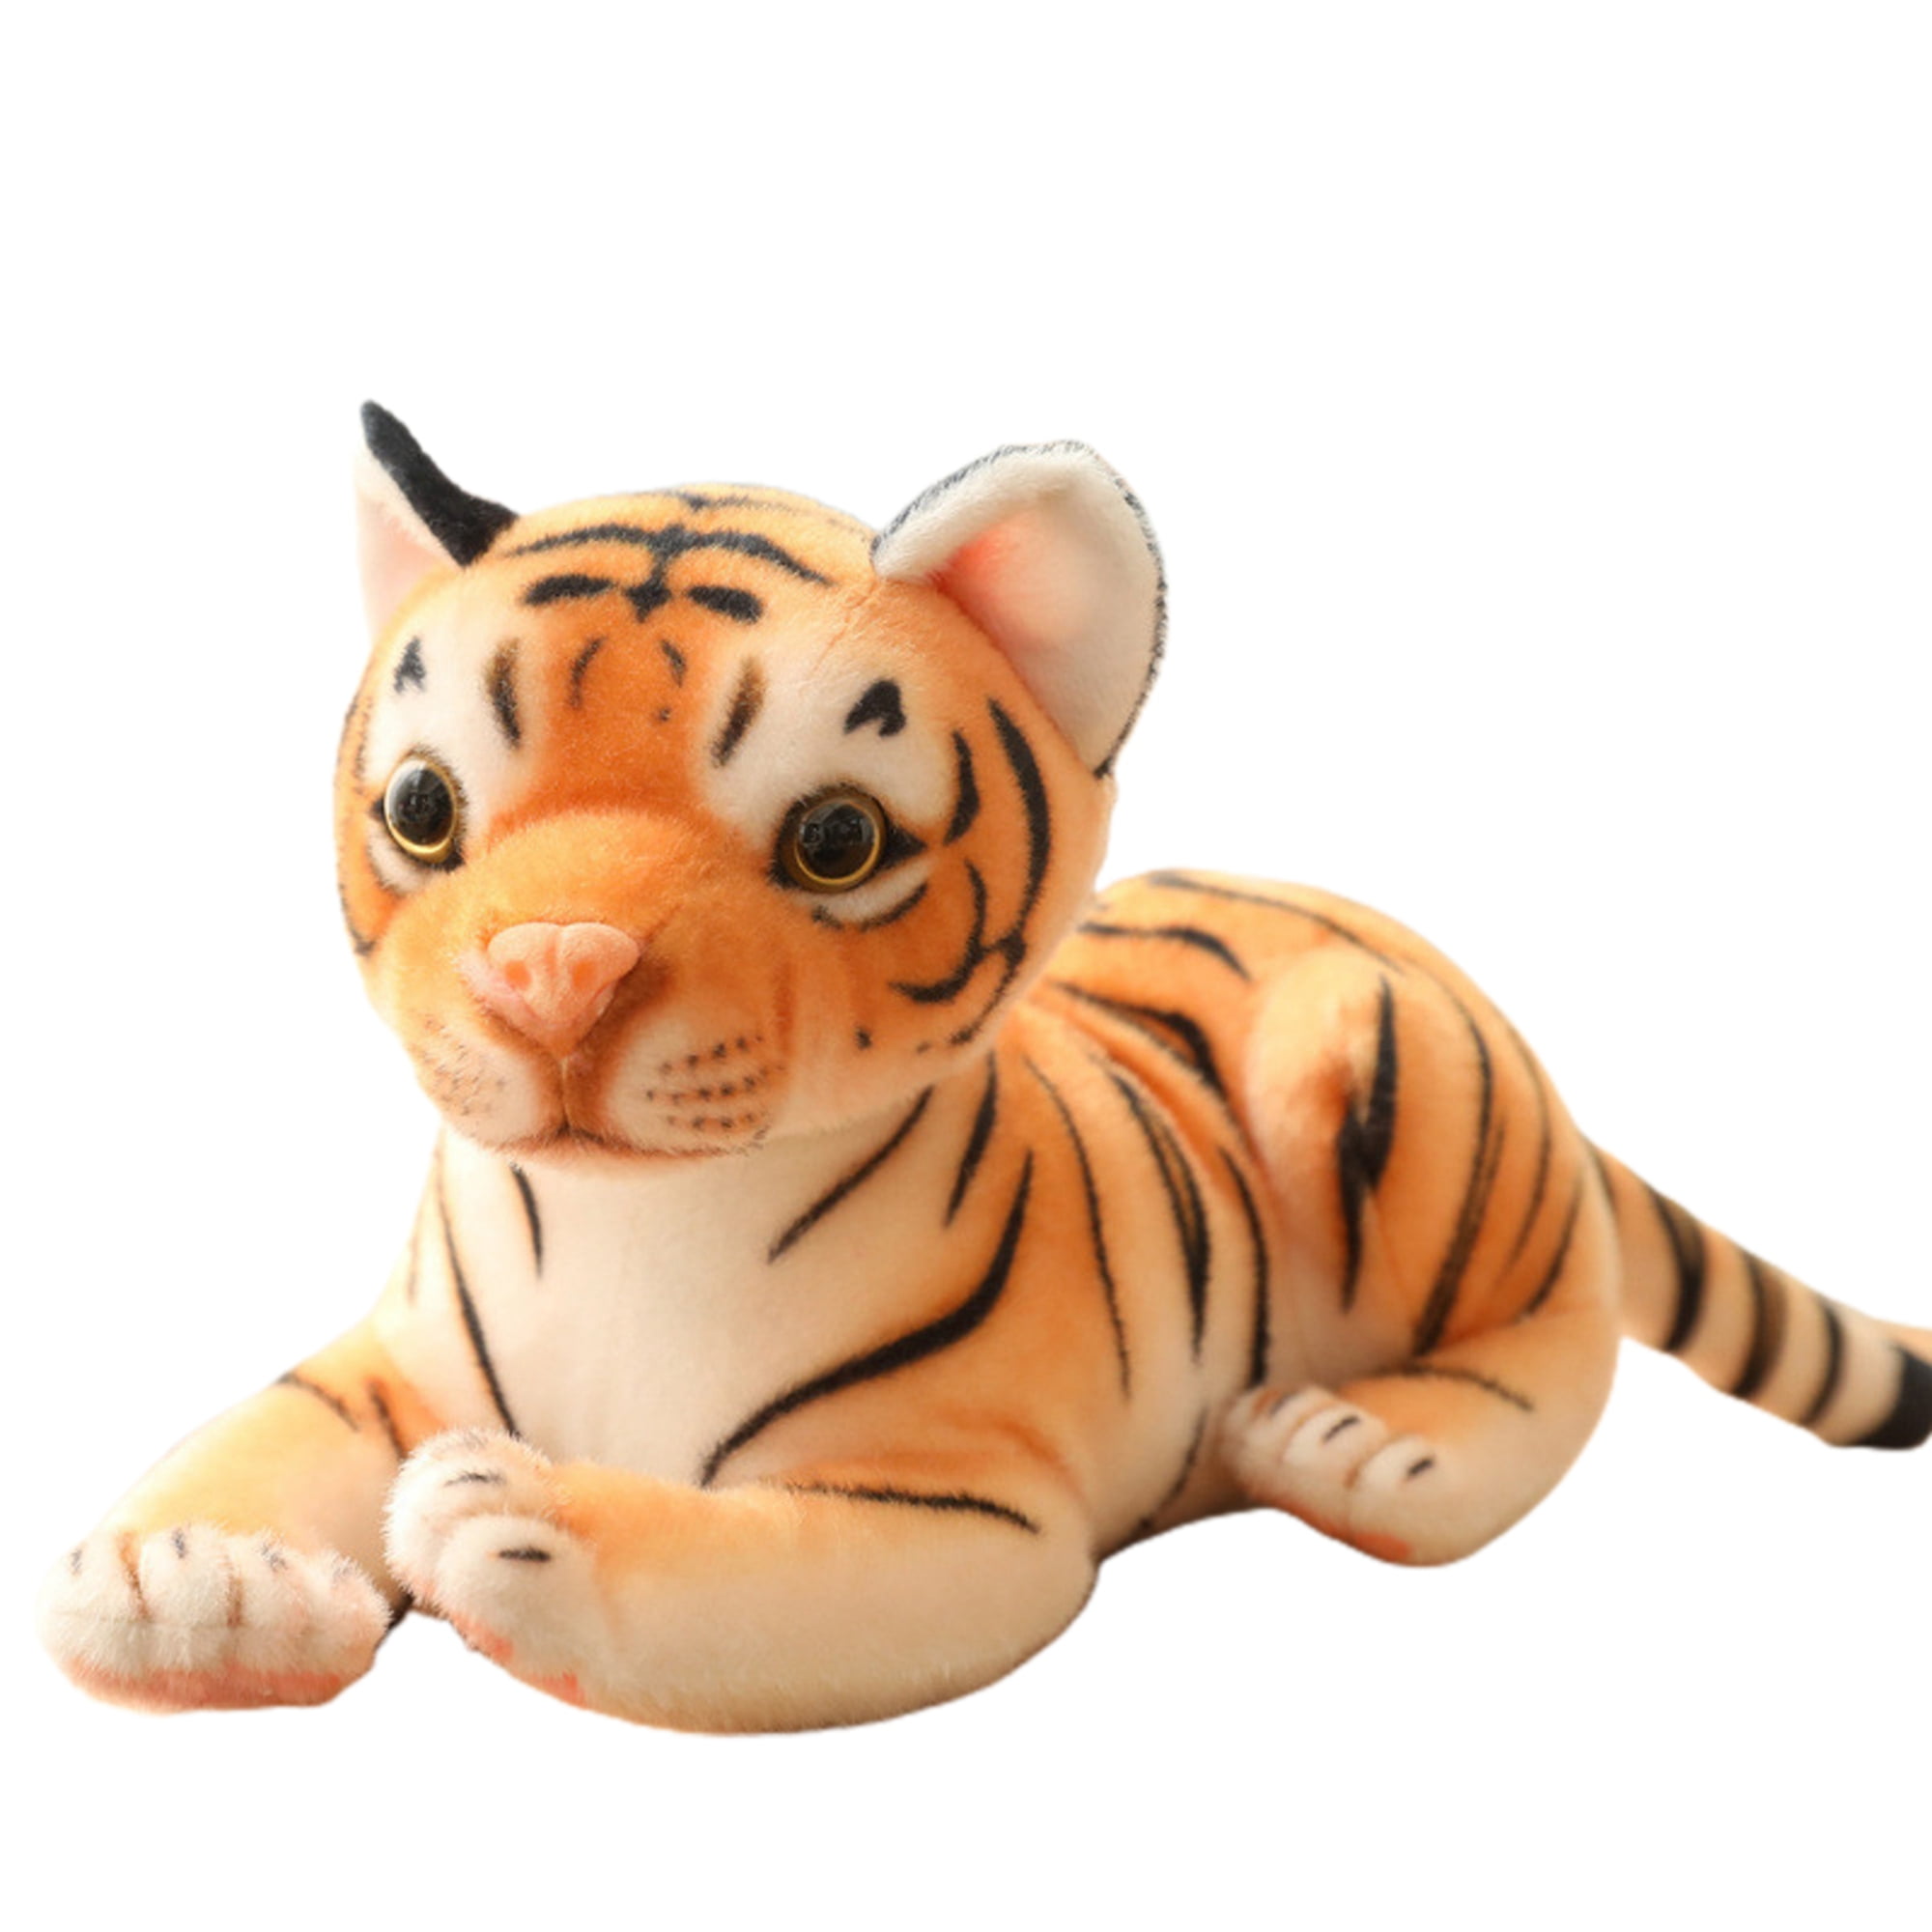 Giant Huge big Tiger Emulational Life Size Plush Stuffed Toys Animal dolls gifts